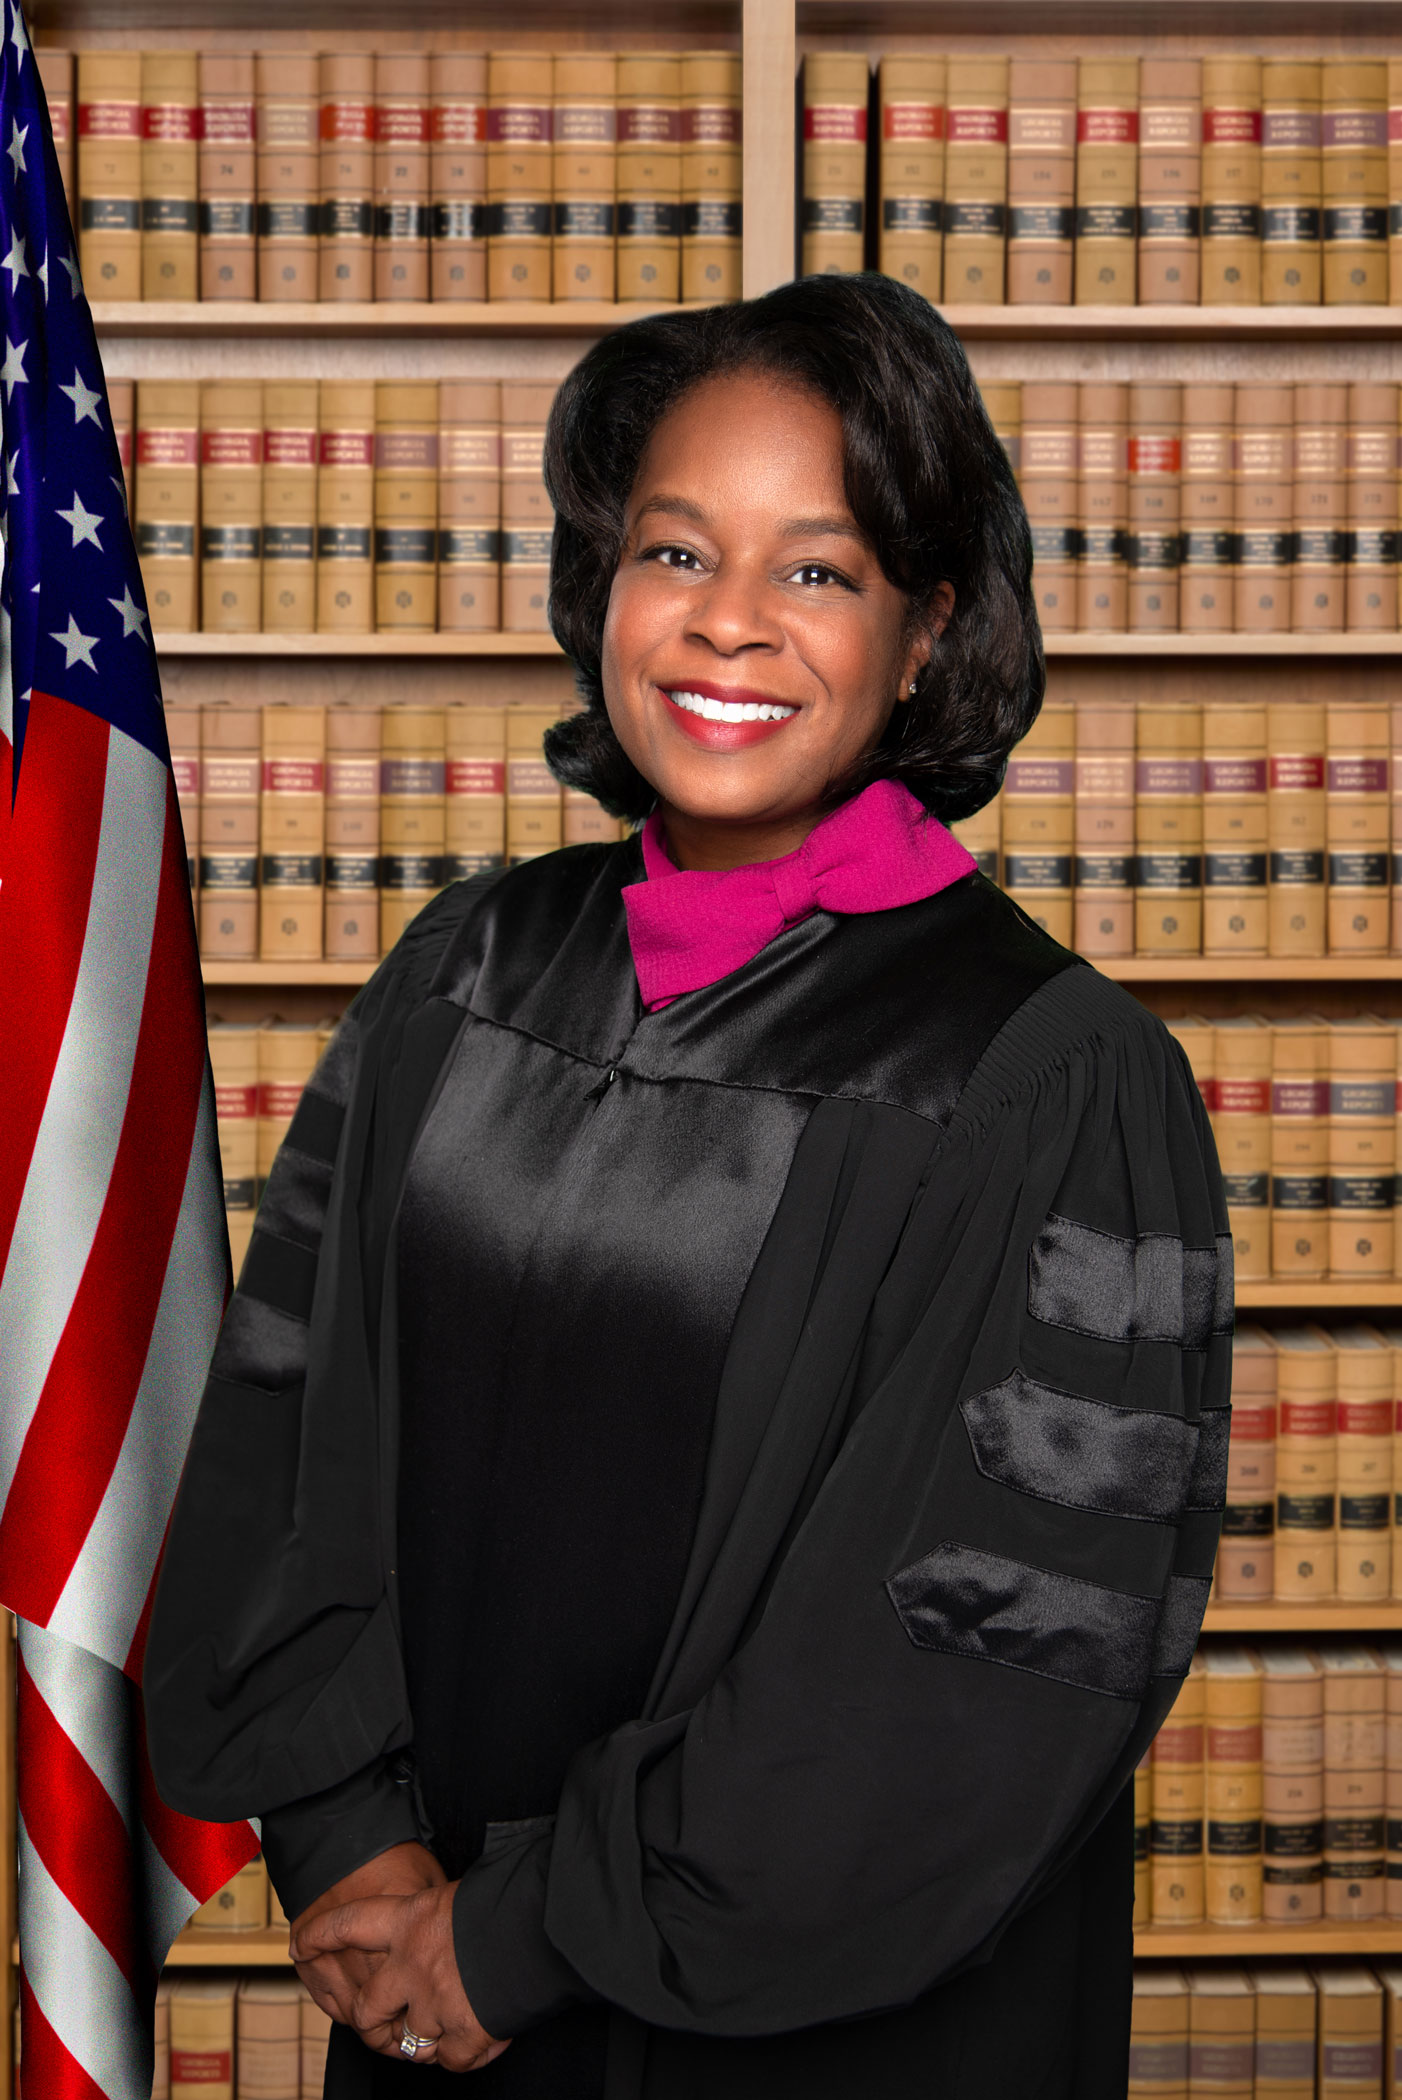 Judge Melynee Leftridge